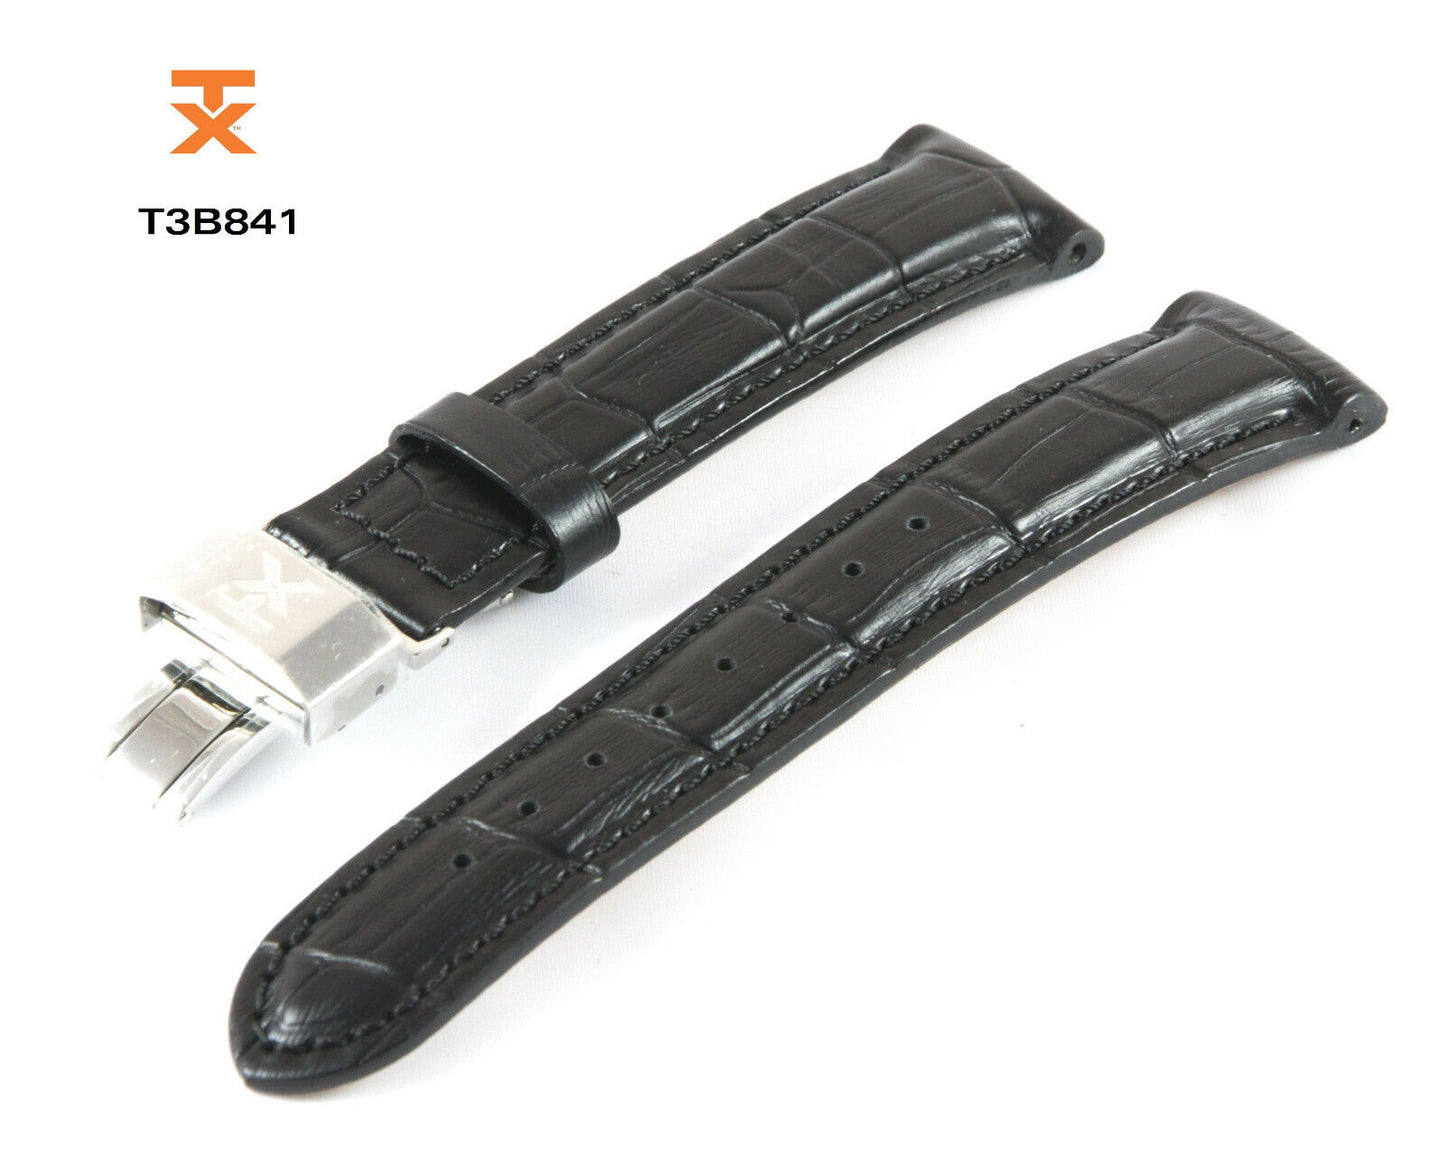 Timex TX Ersatzarmband T3B841 - TX 300 und TX 500 Series Ersatzband Leder 20mm